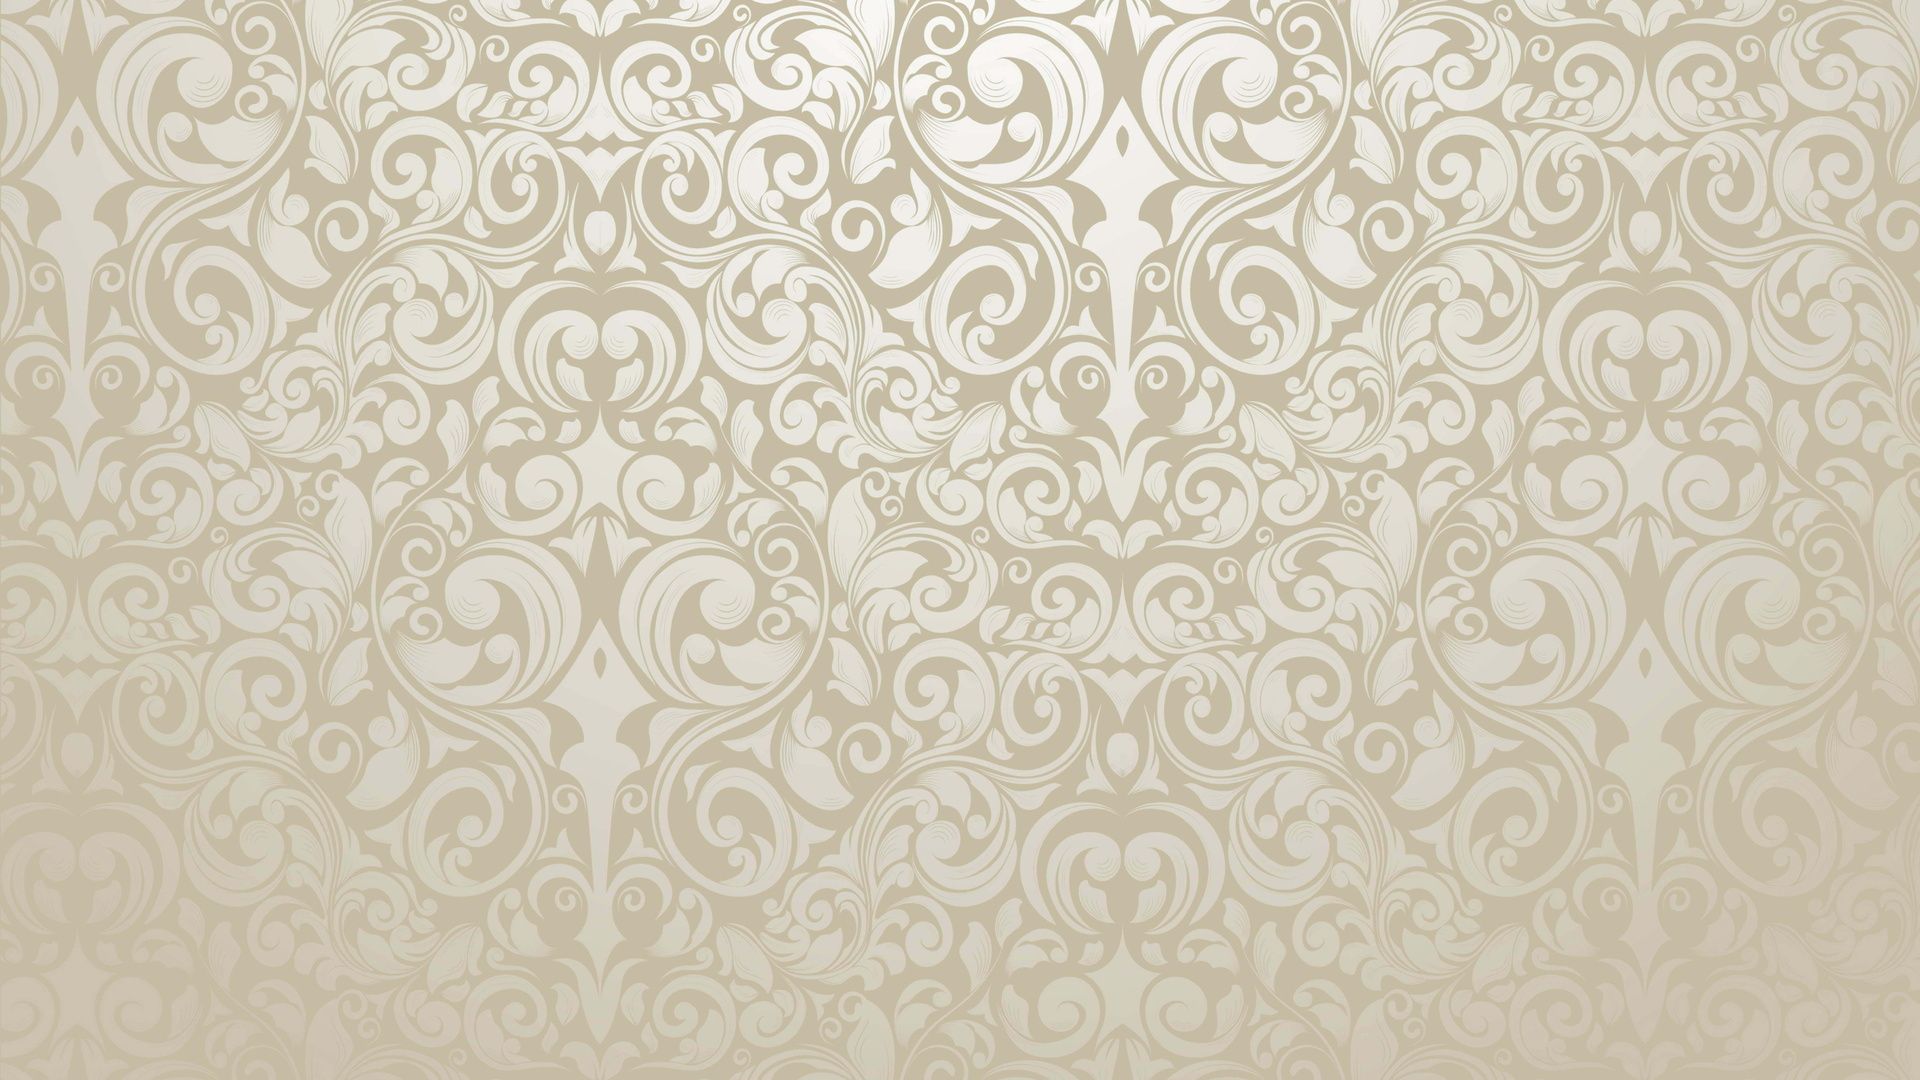 Texture Wallpapers